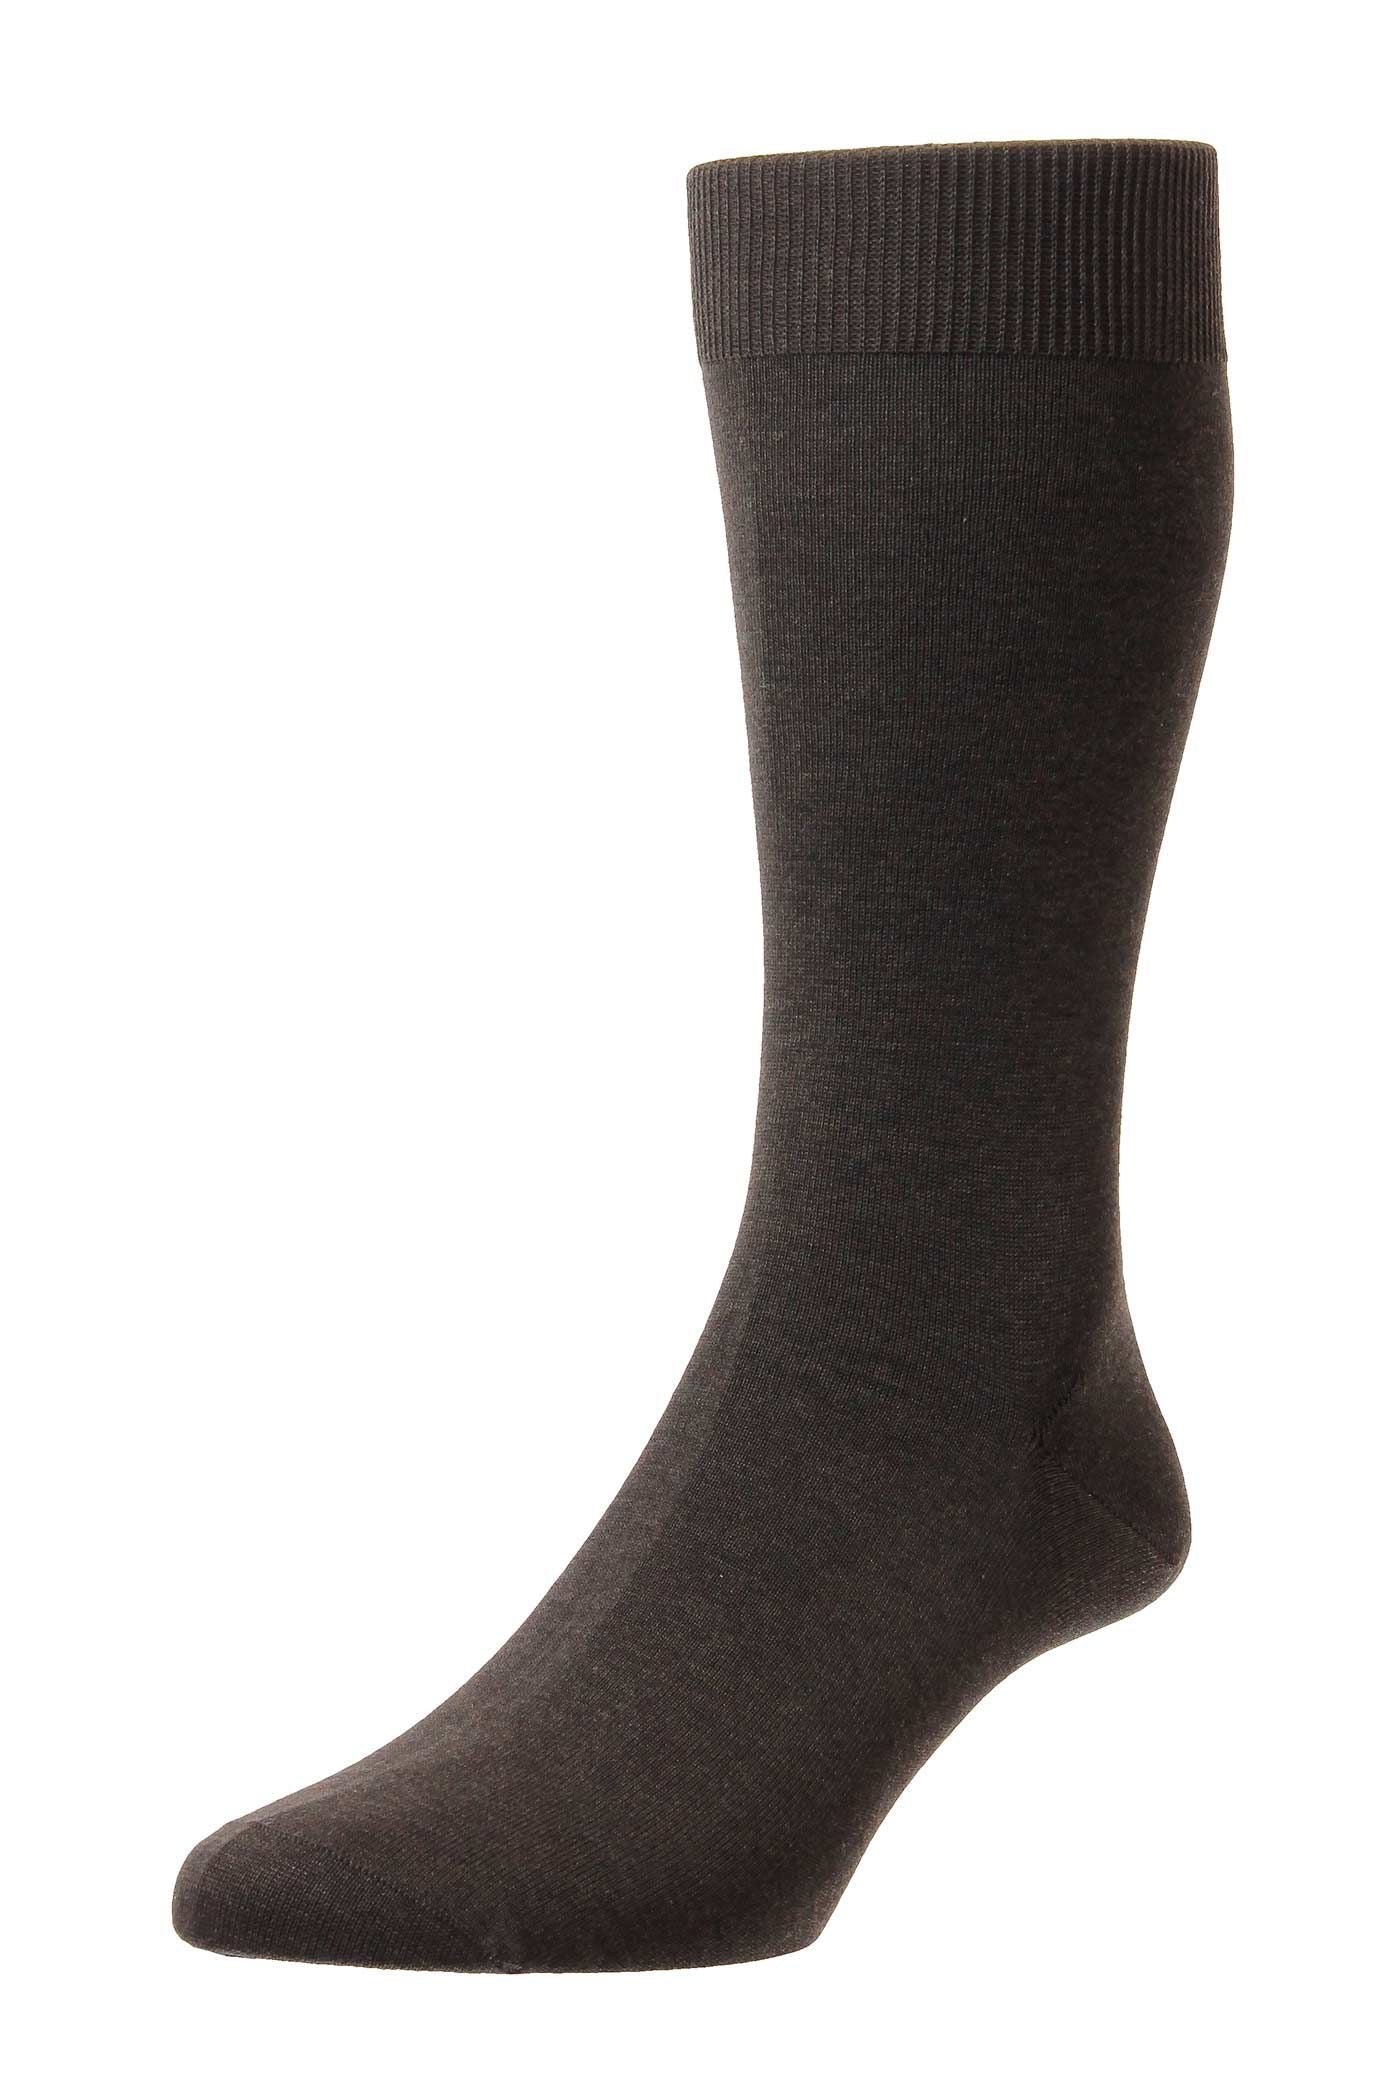 Men's Socks - Sackville (5373) Flat Knit Fil d'Ecosse / Cotton Lisle - DARK BROWN MIX